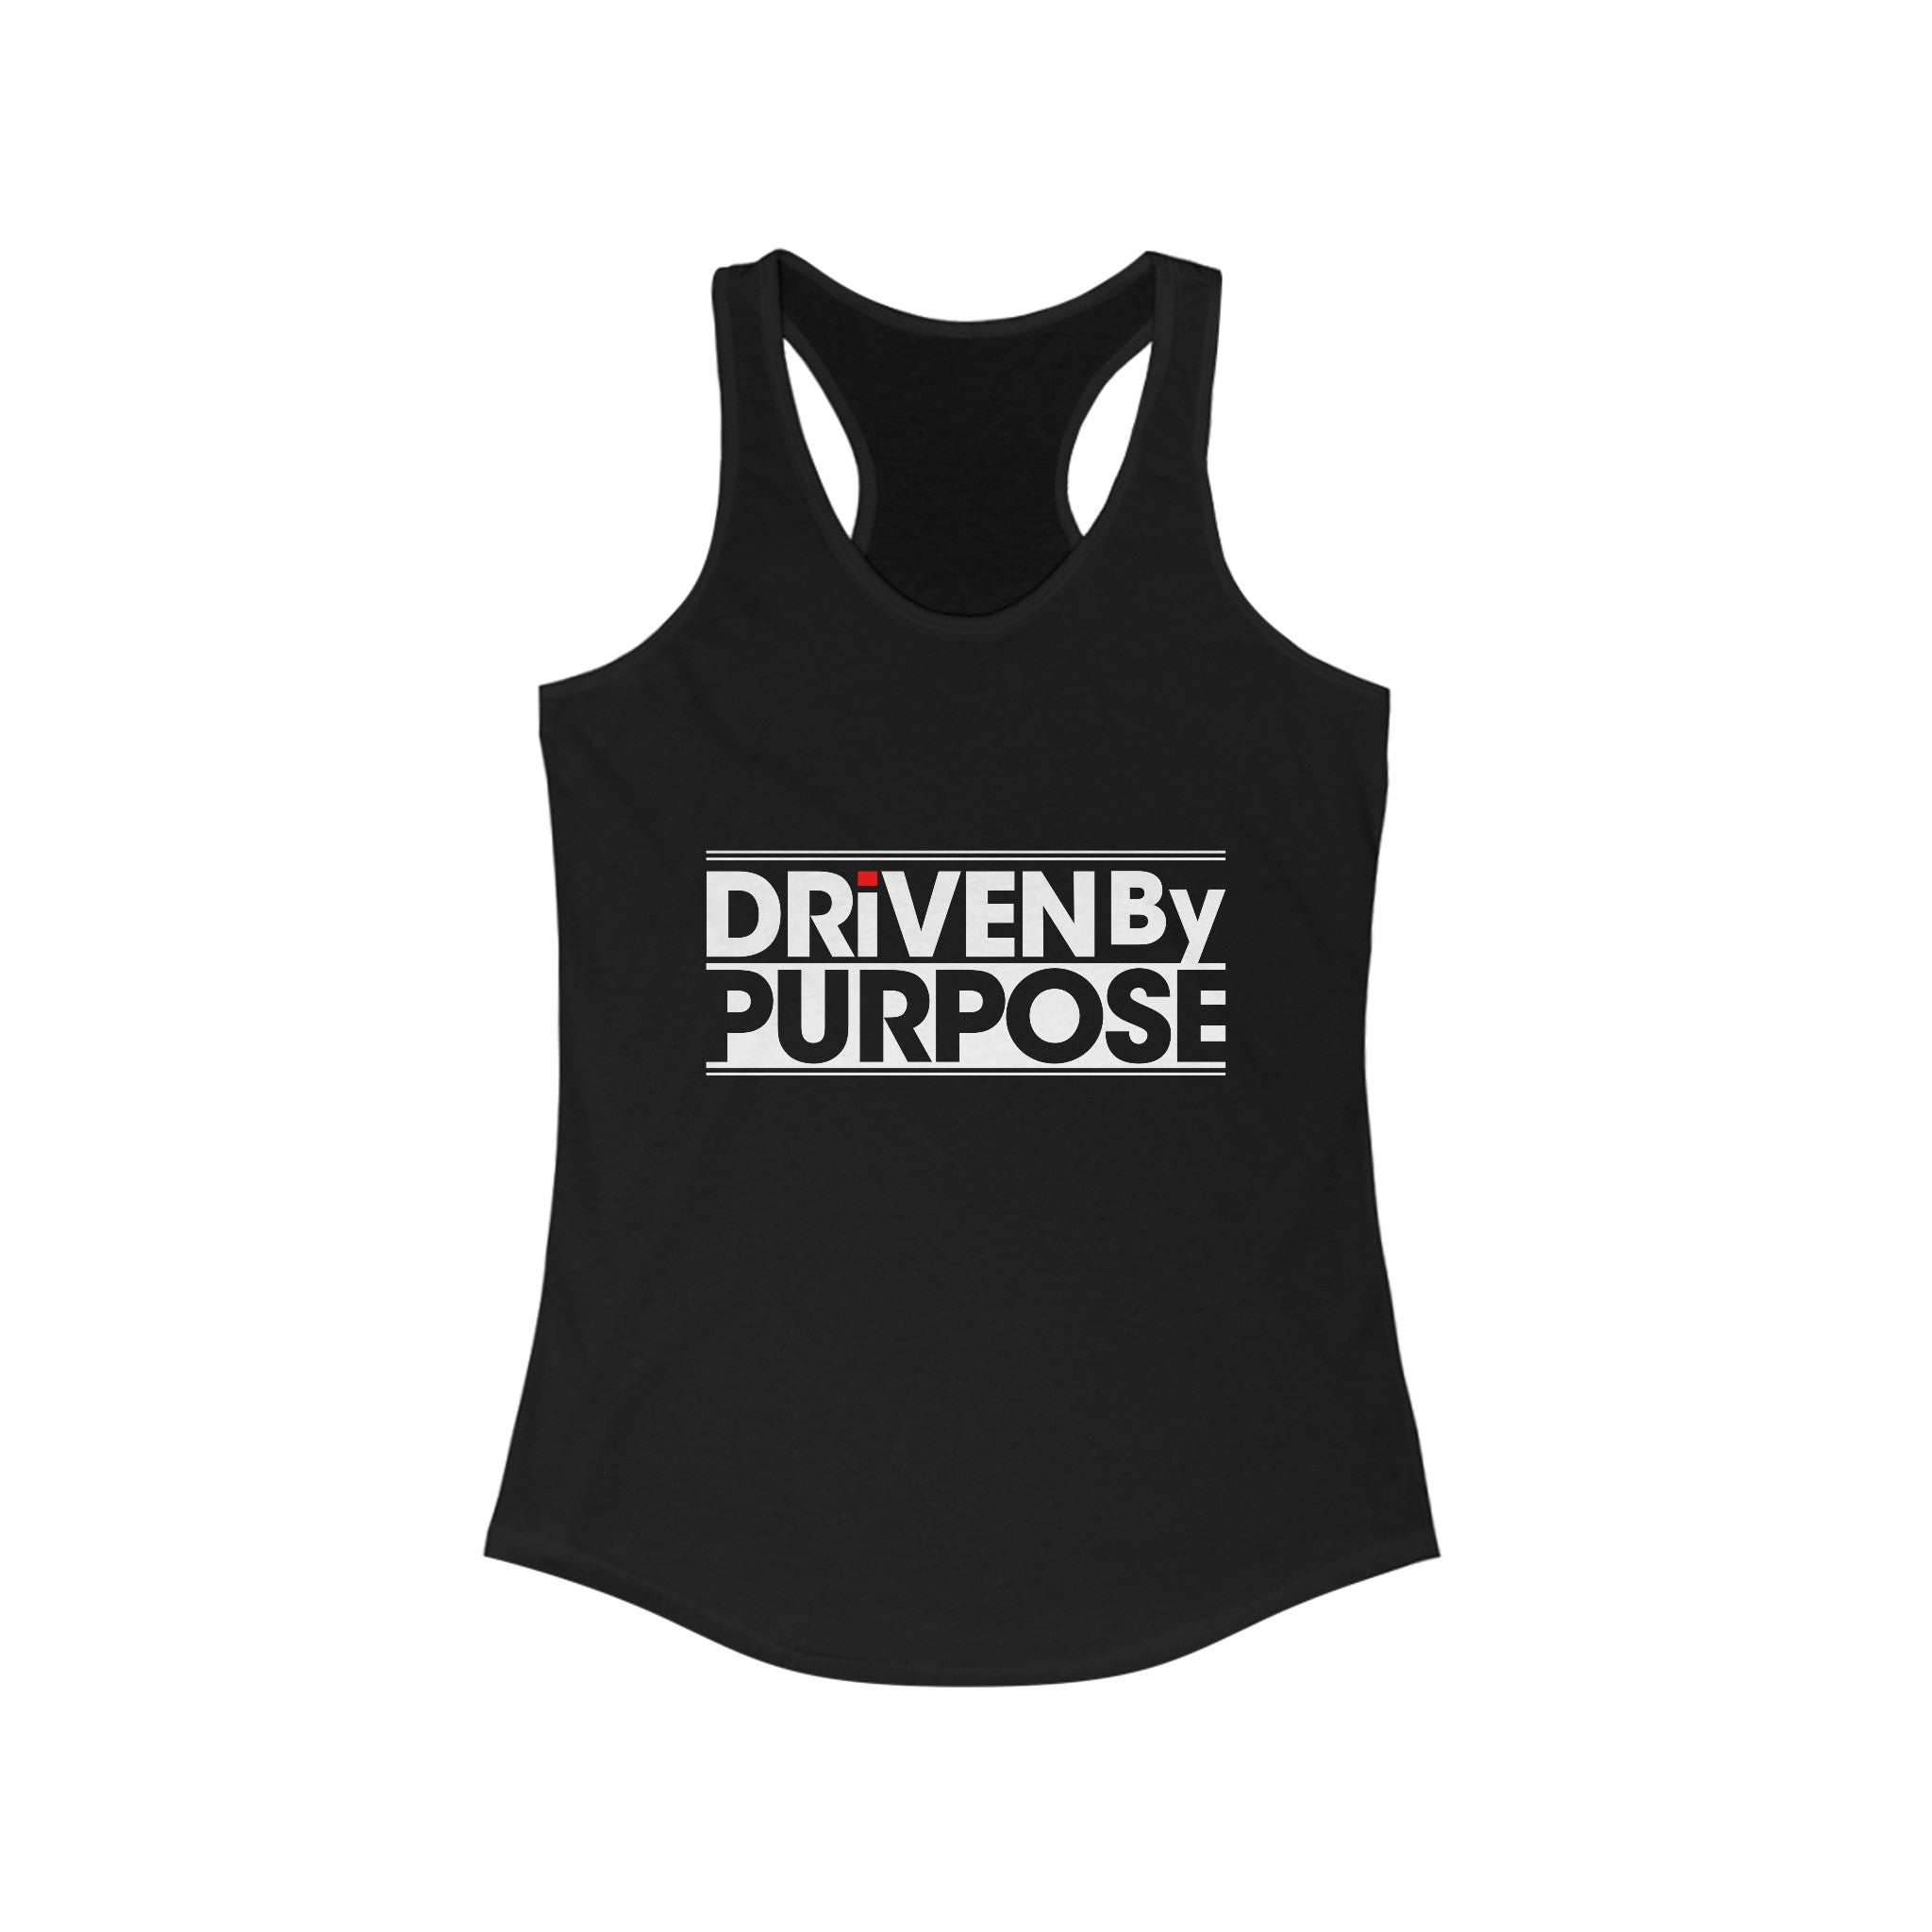 Driven by Purpose - Women's Racerback Tank